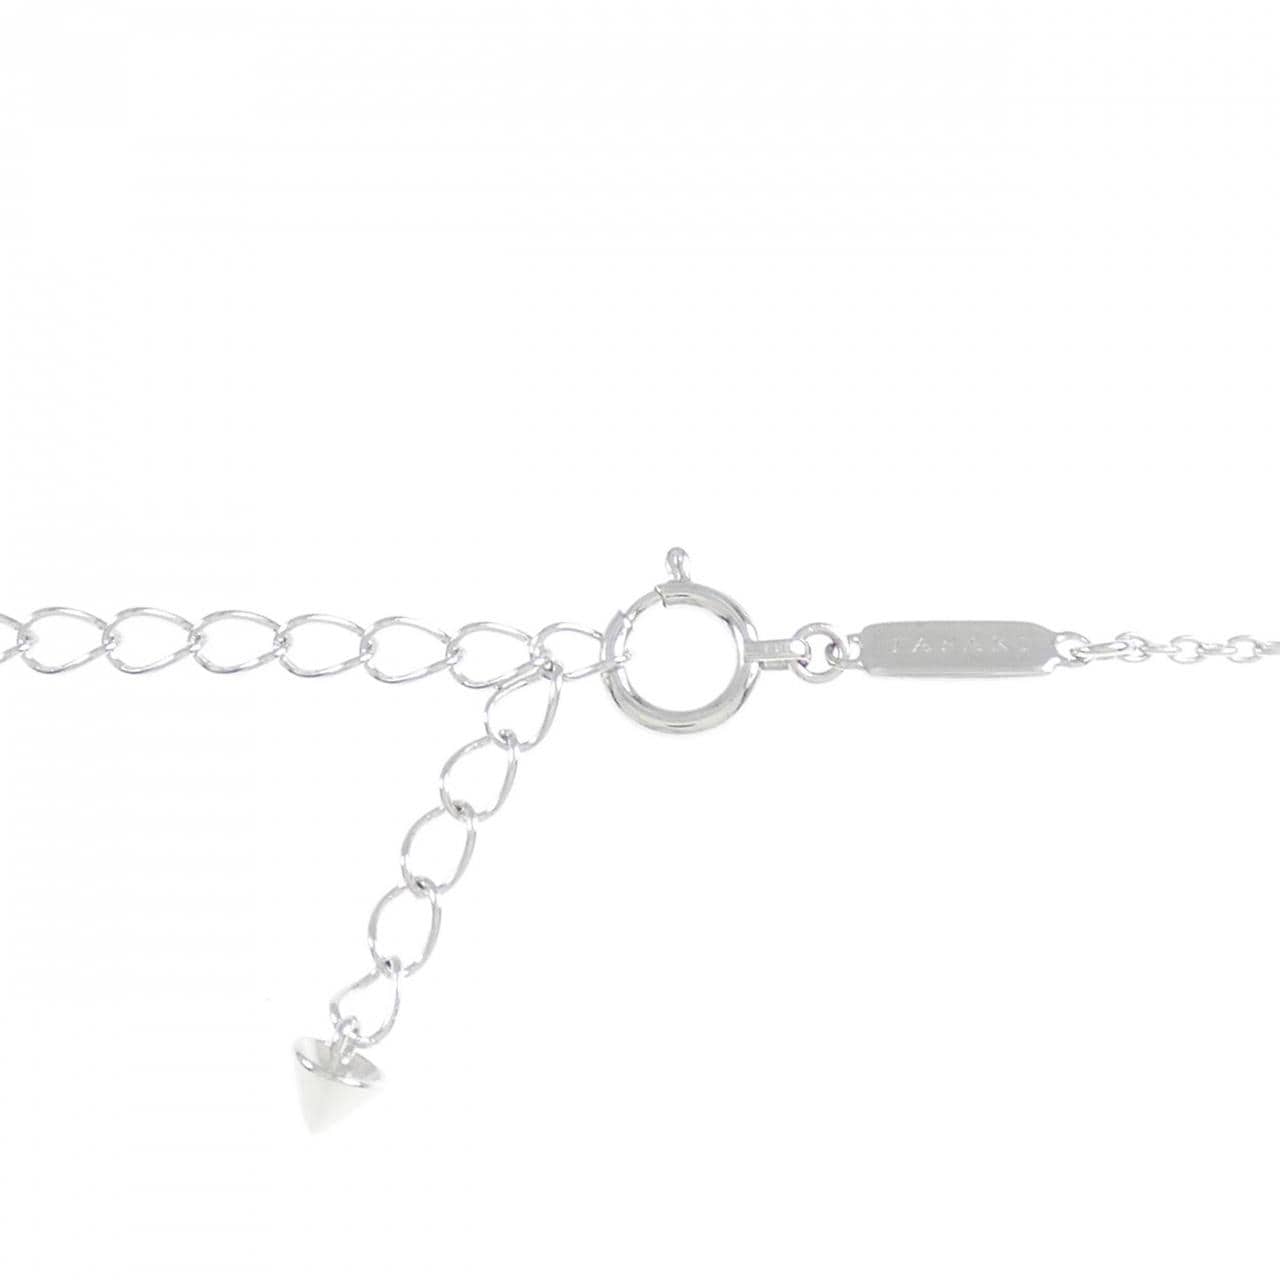 Tasaki Petit Balance Class Necklace 7.2mm